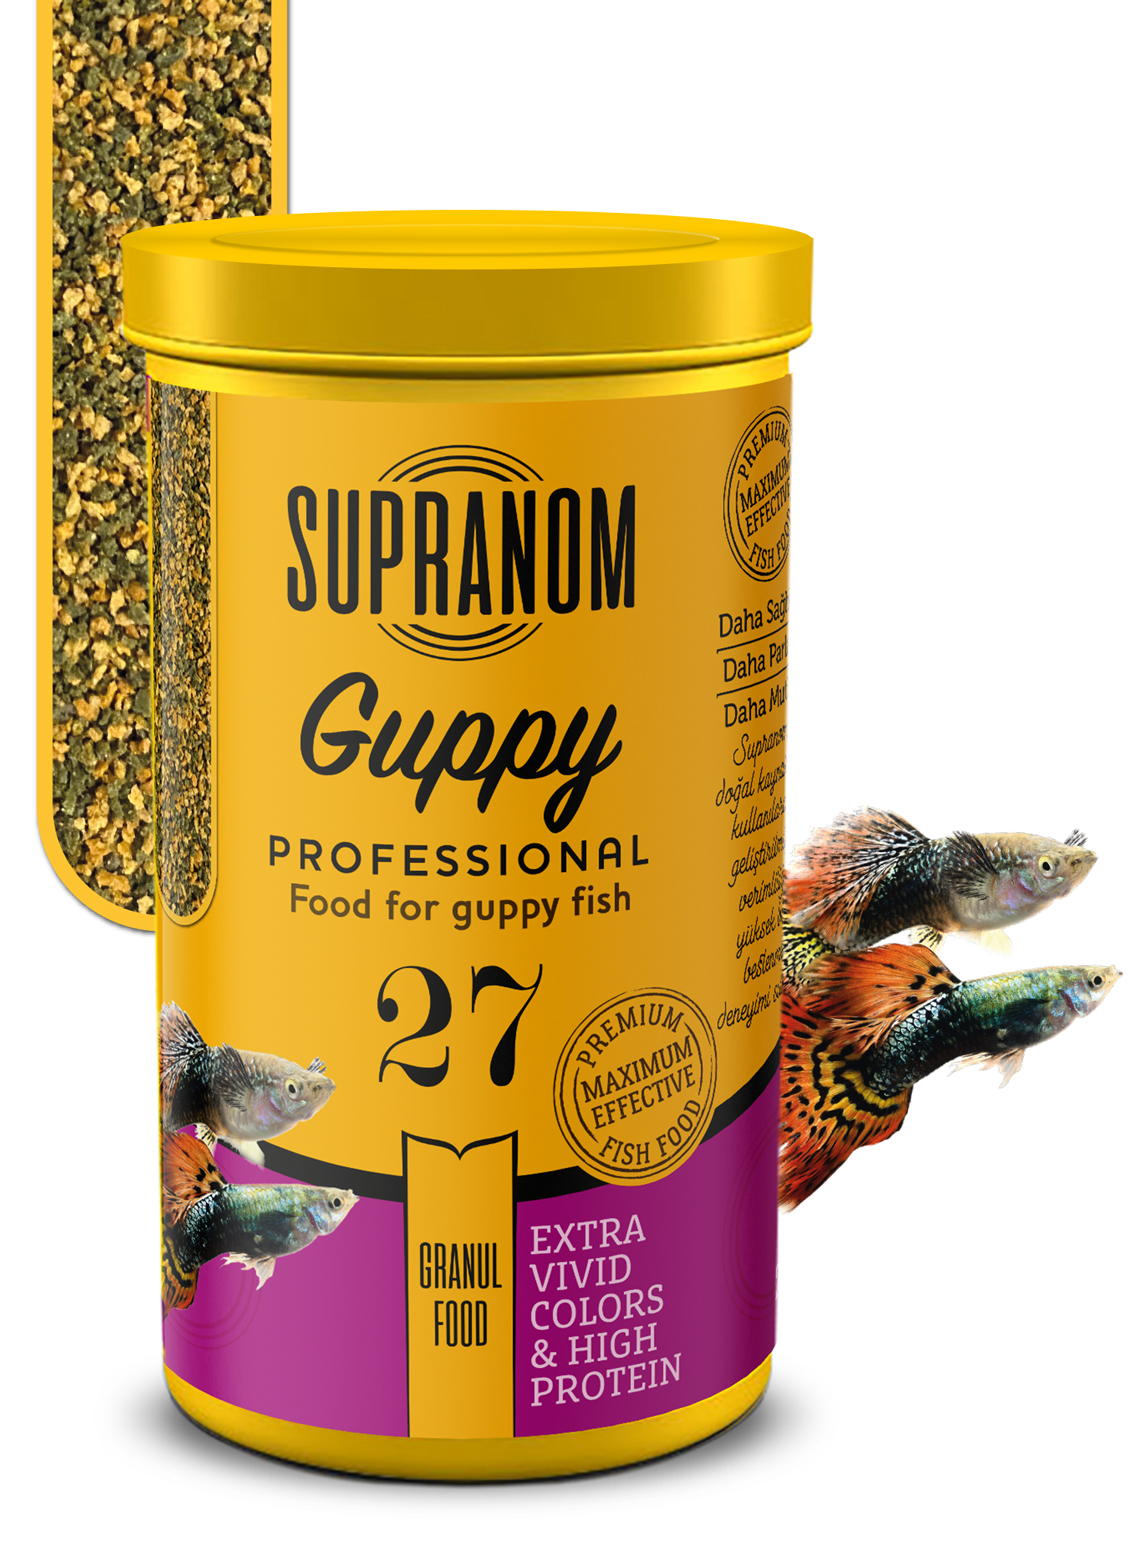 Supranom guppy balık yemi granul food 250ml (27)-1